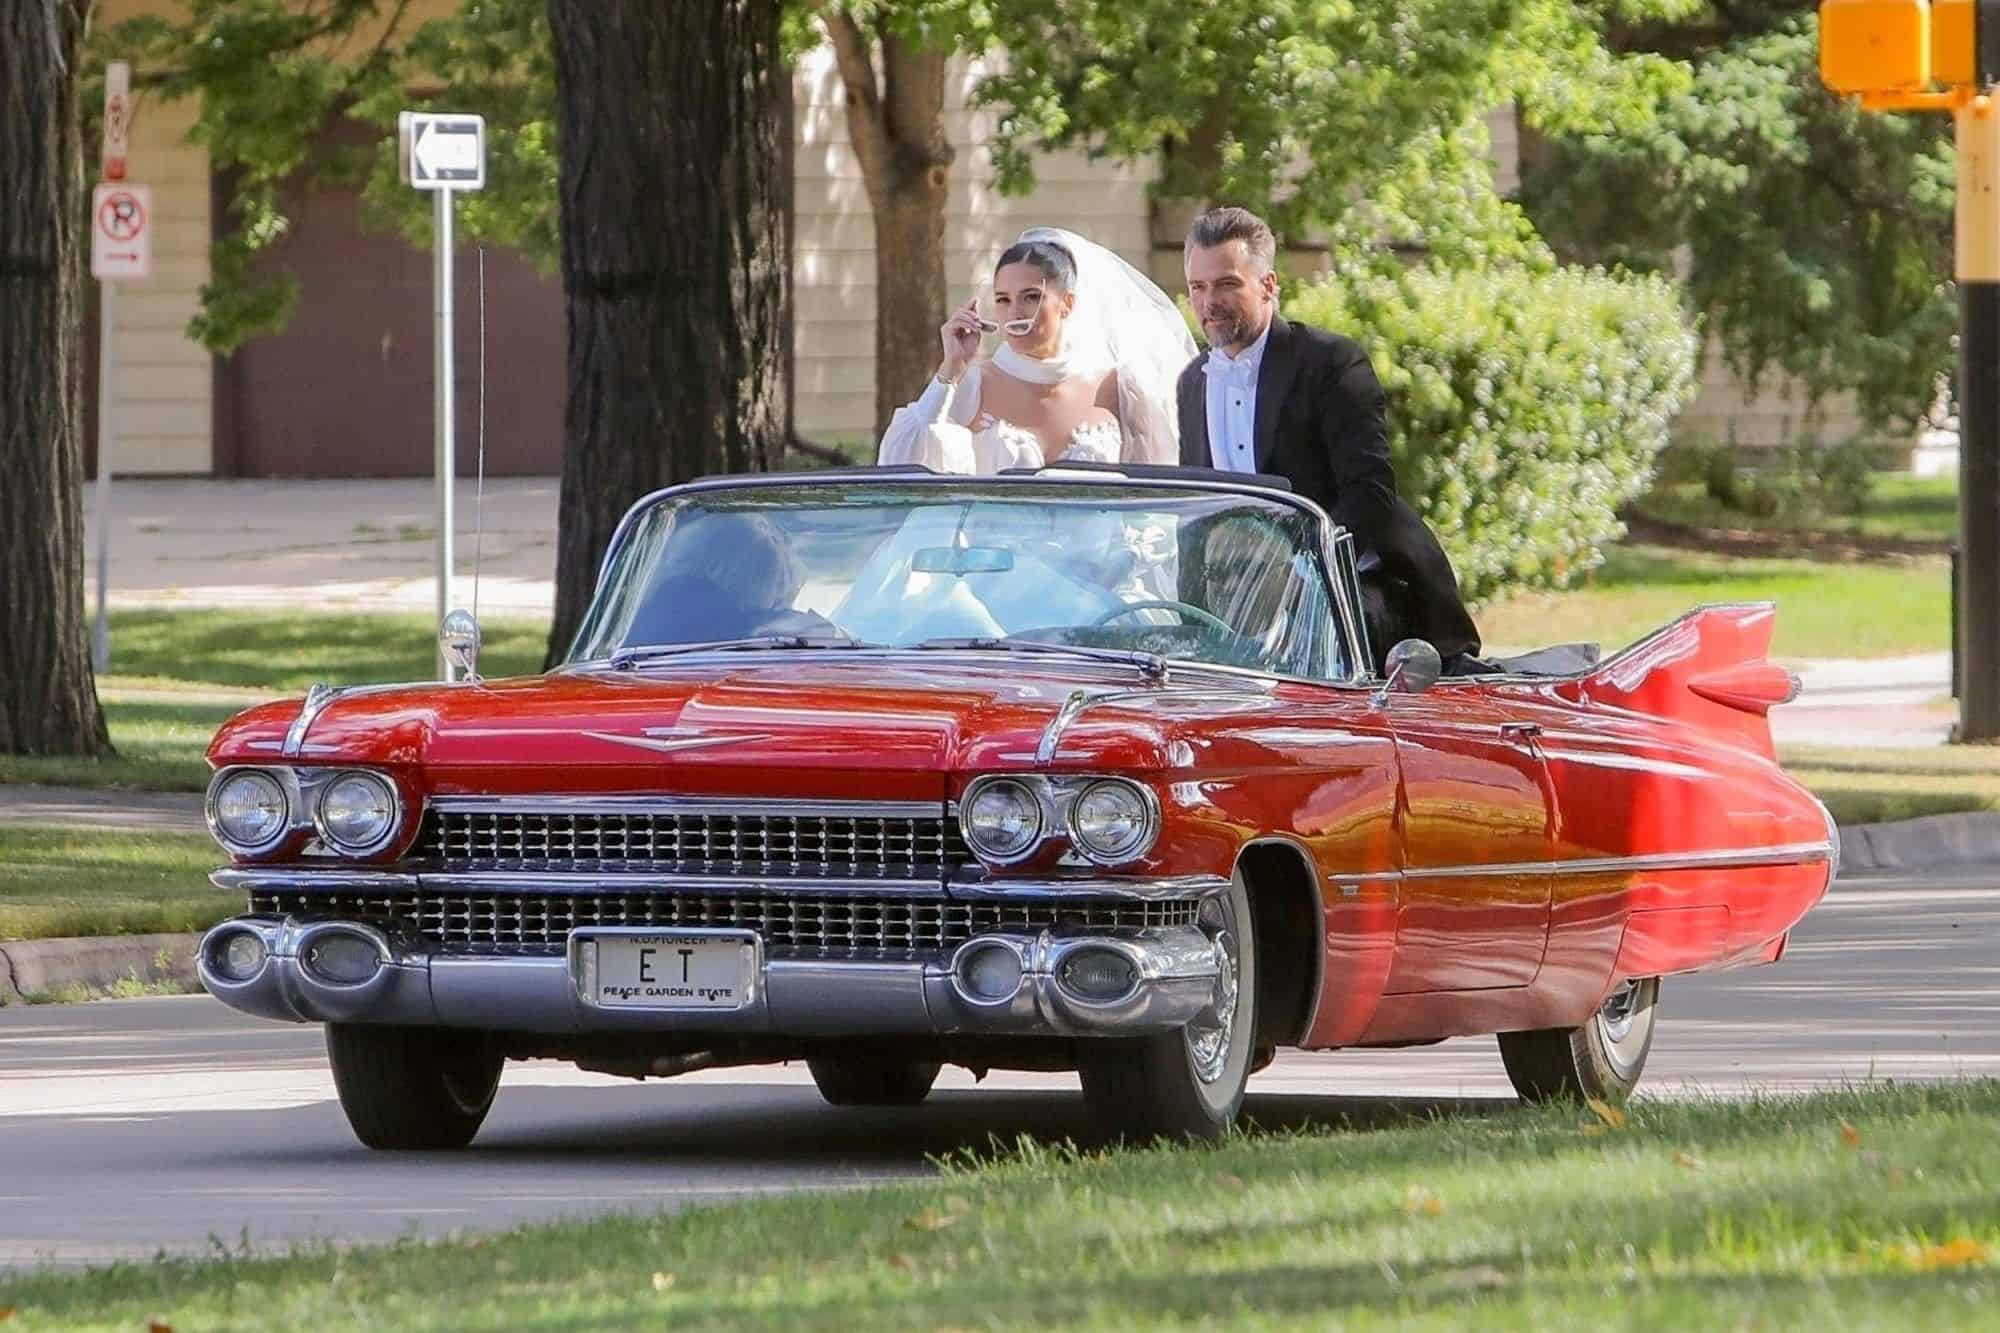 WeSmirch: Josh Duhamel Marries Audra Mari in North Dakota Wedding Ceremony (Nicholas Rice/People.com)